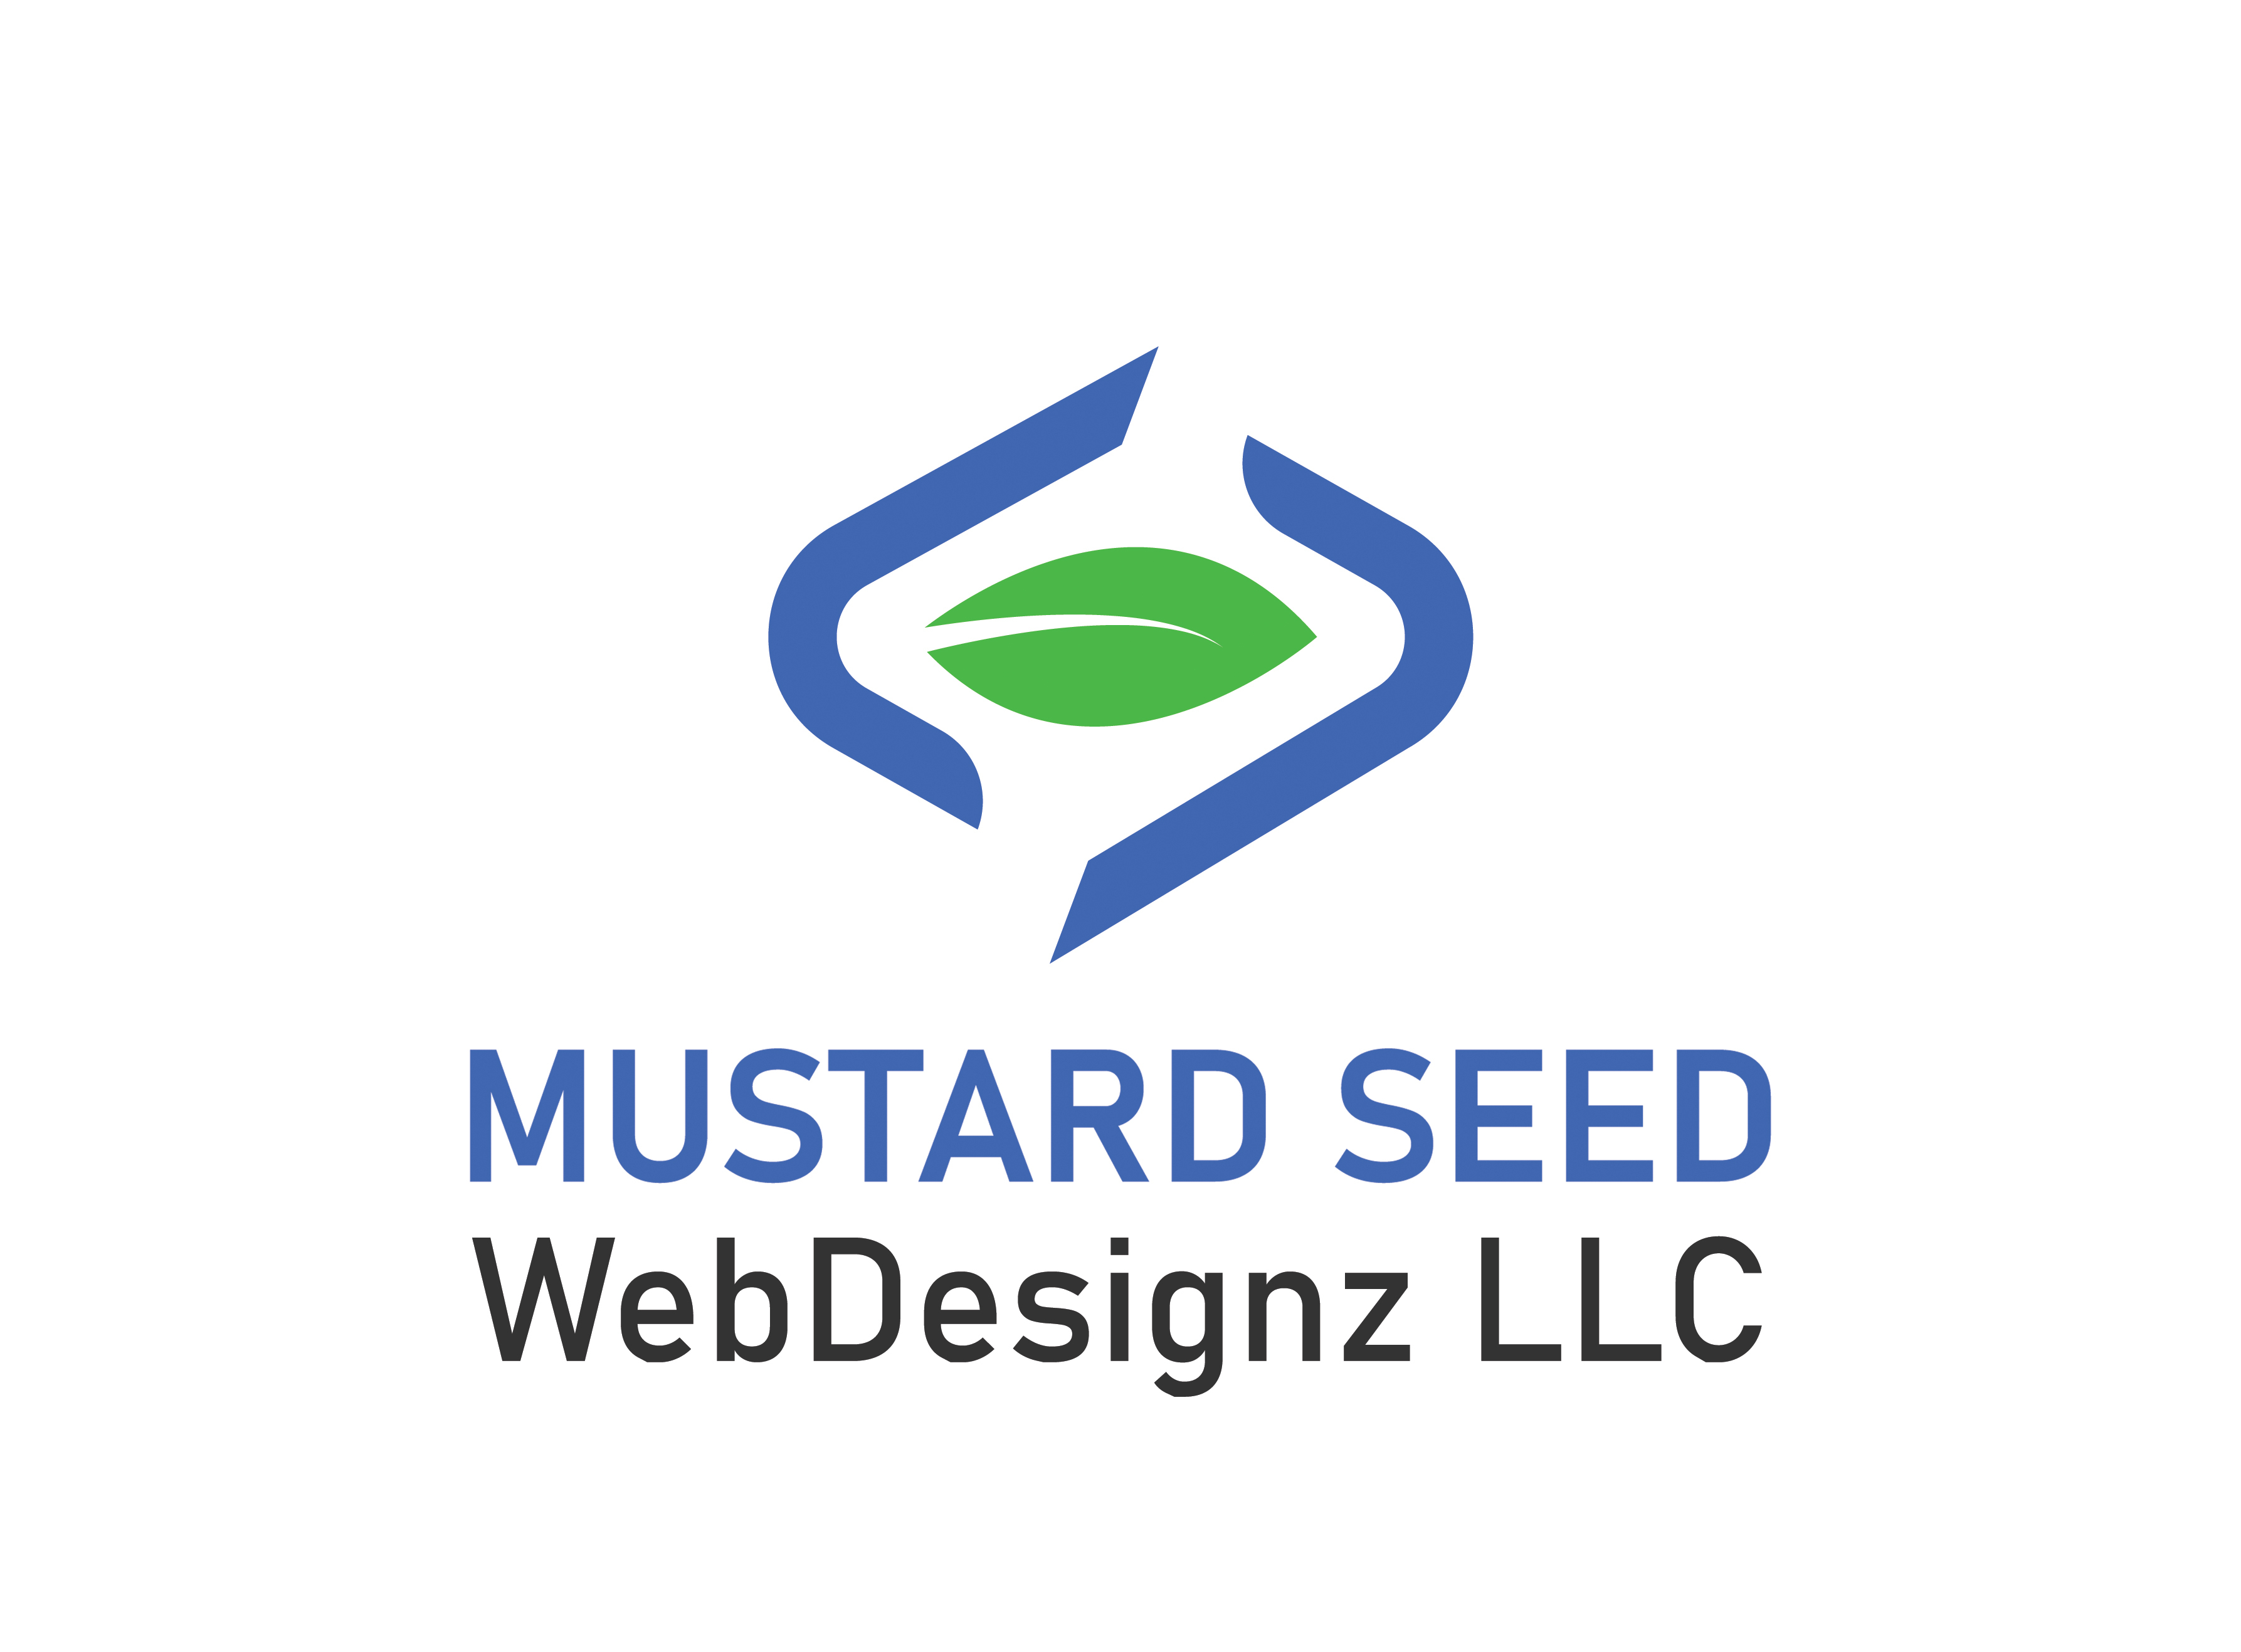 Mustard Seed WebDesignz LLC